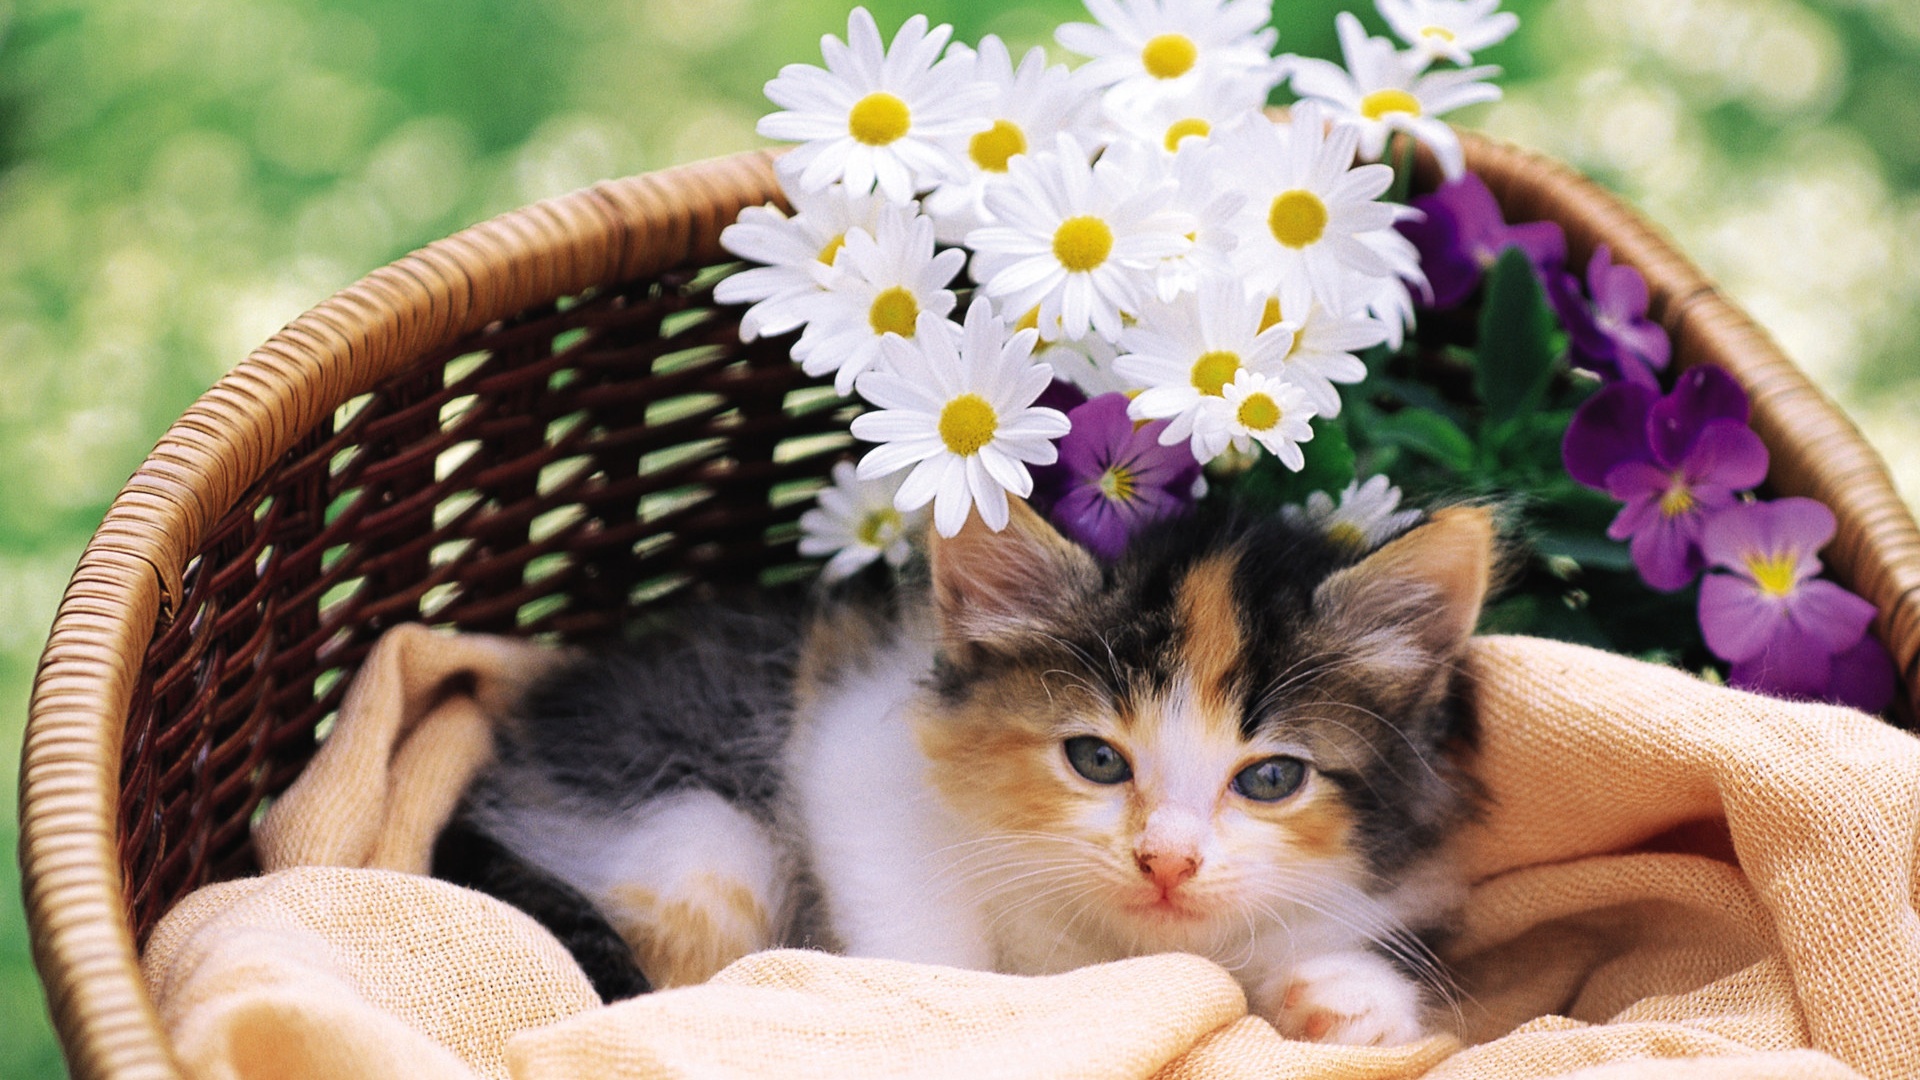 Cat And Flower In Basket - Kitten With Flowers - HD Wallpaper 